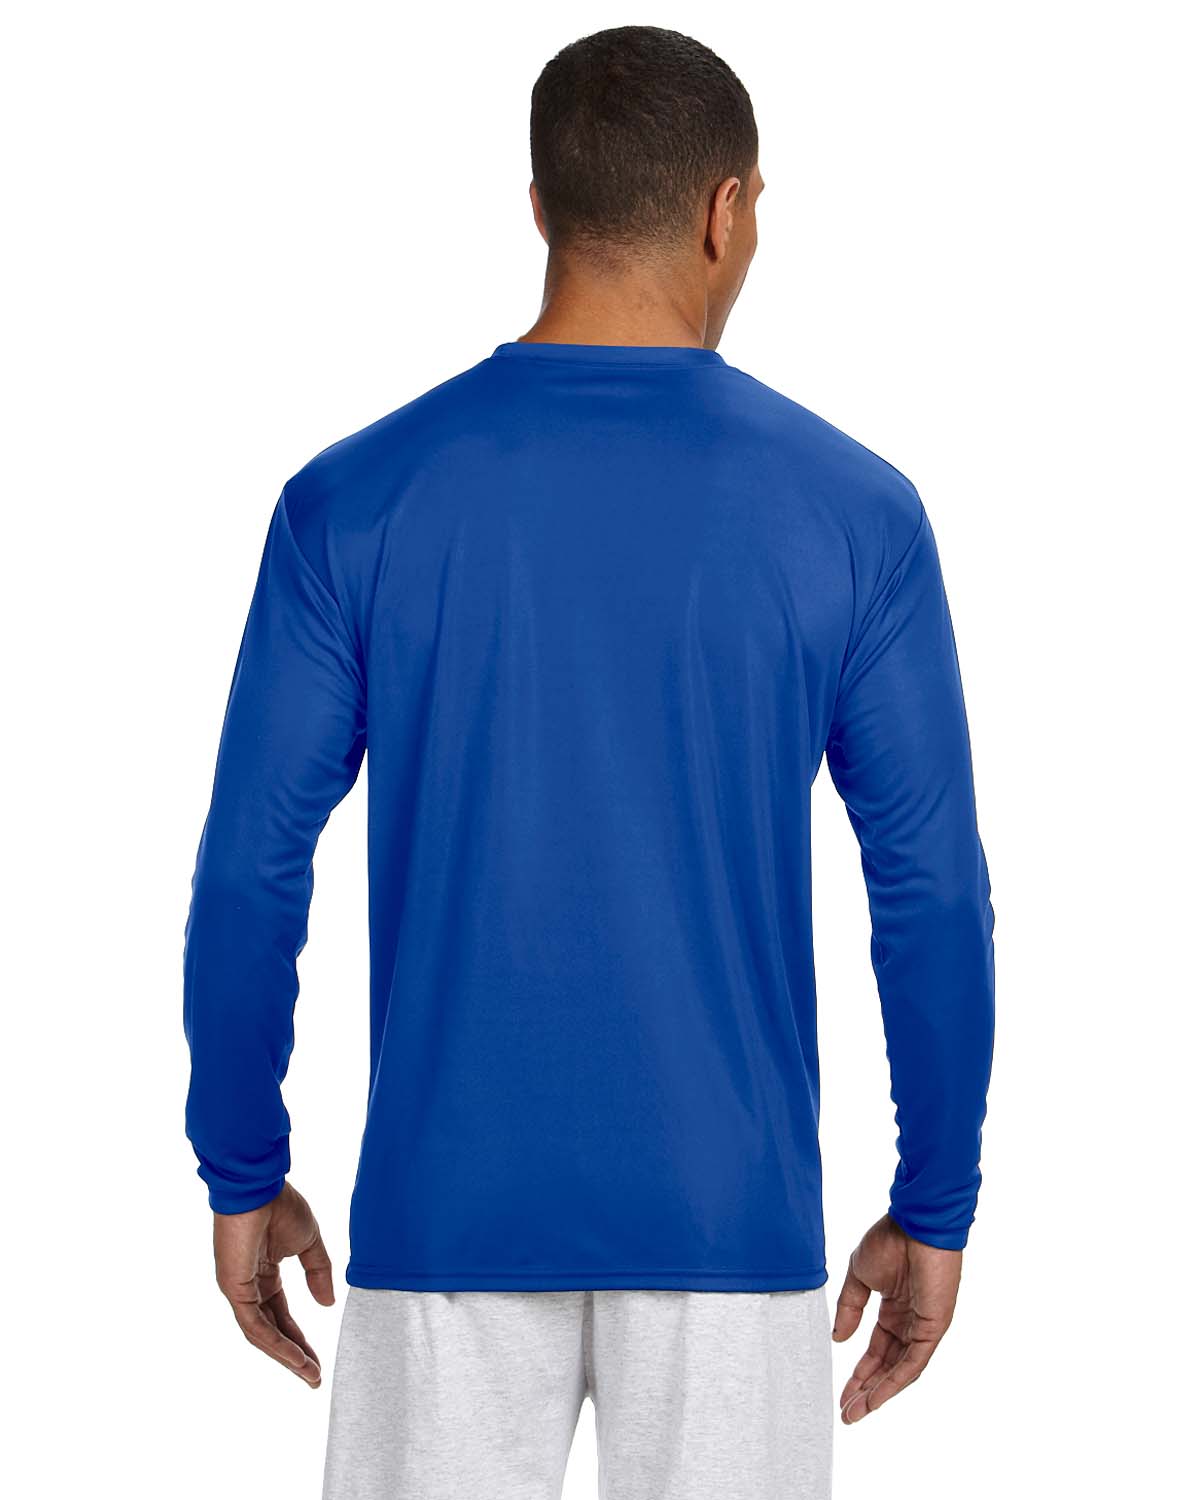 A4 Mens Dri-Fit 100% Polyester UPF 44+ UV Performance Long Sleeve